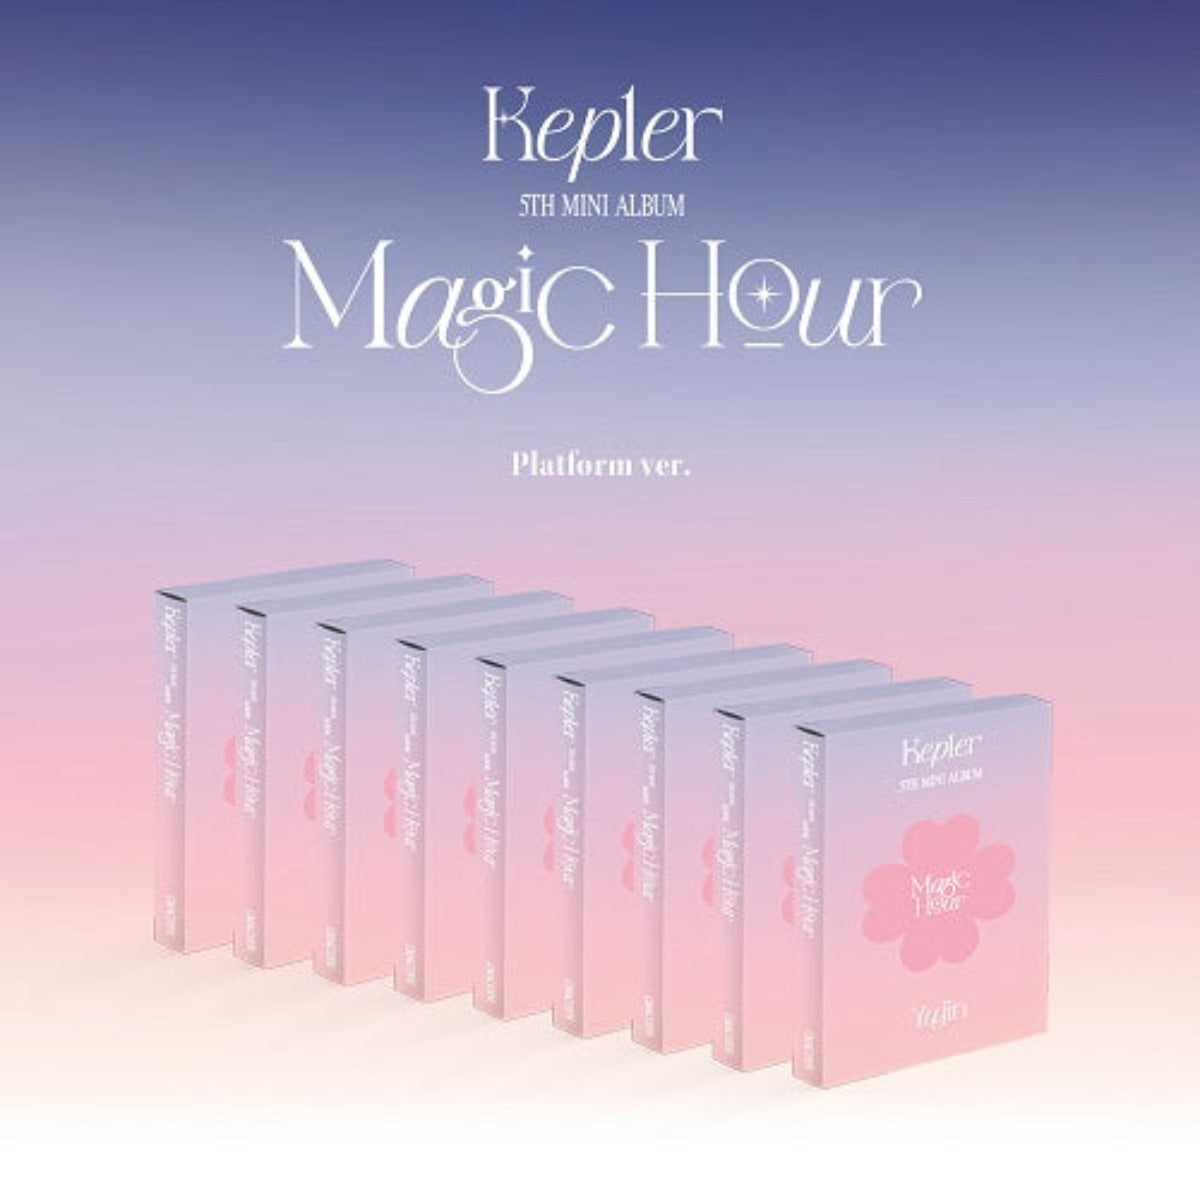 Kep1er Mini Album Vol. 5 - Magic Hour (Platform Version)